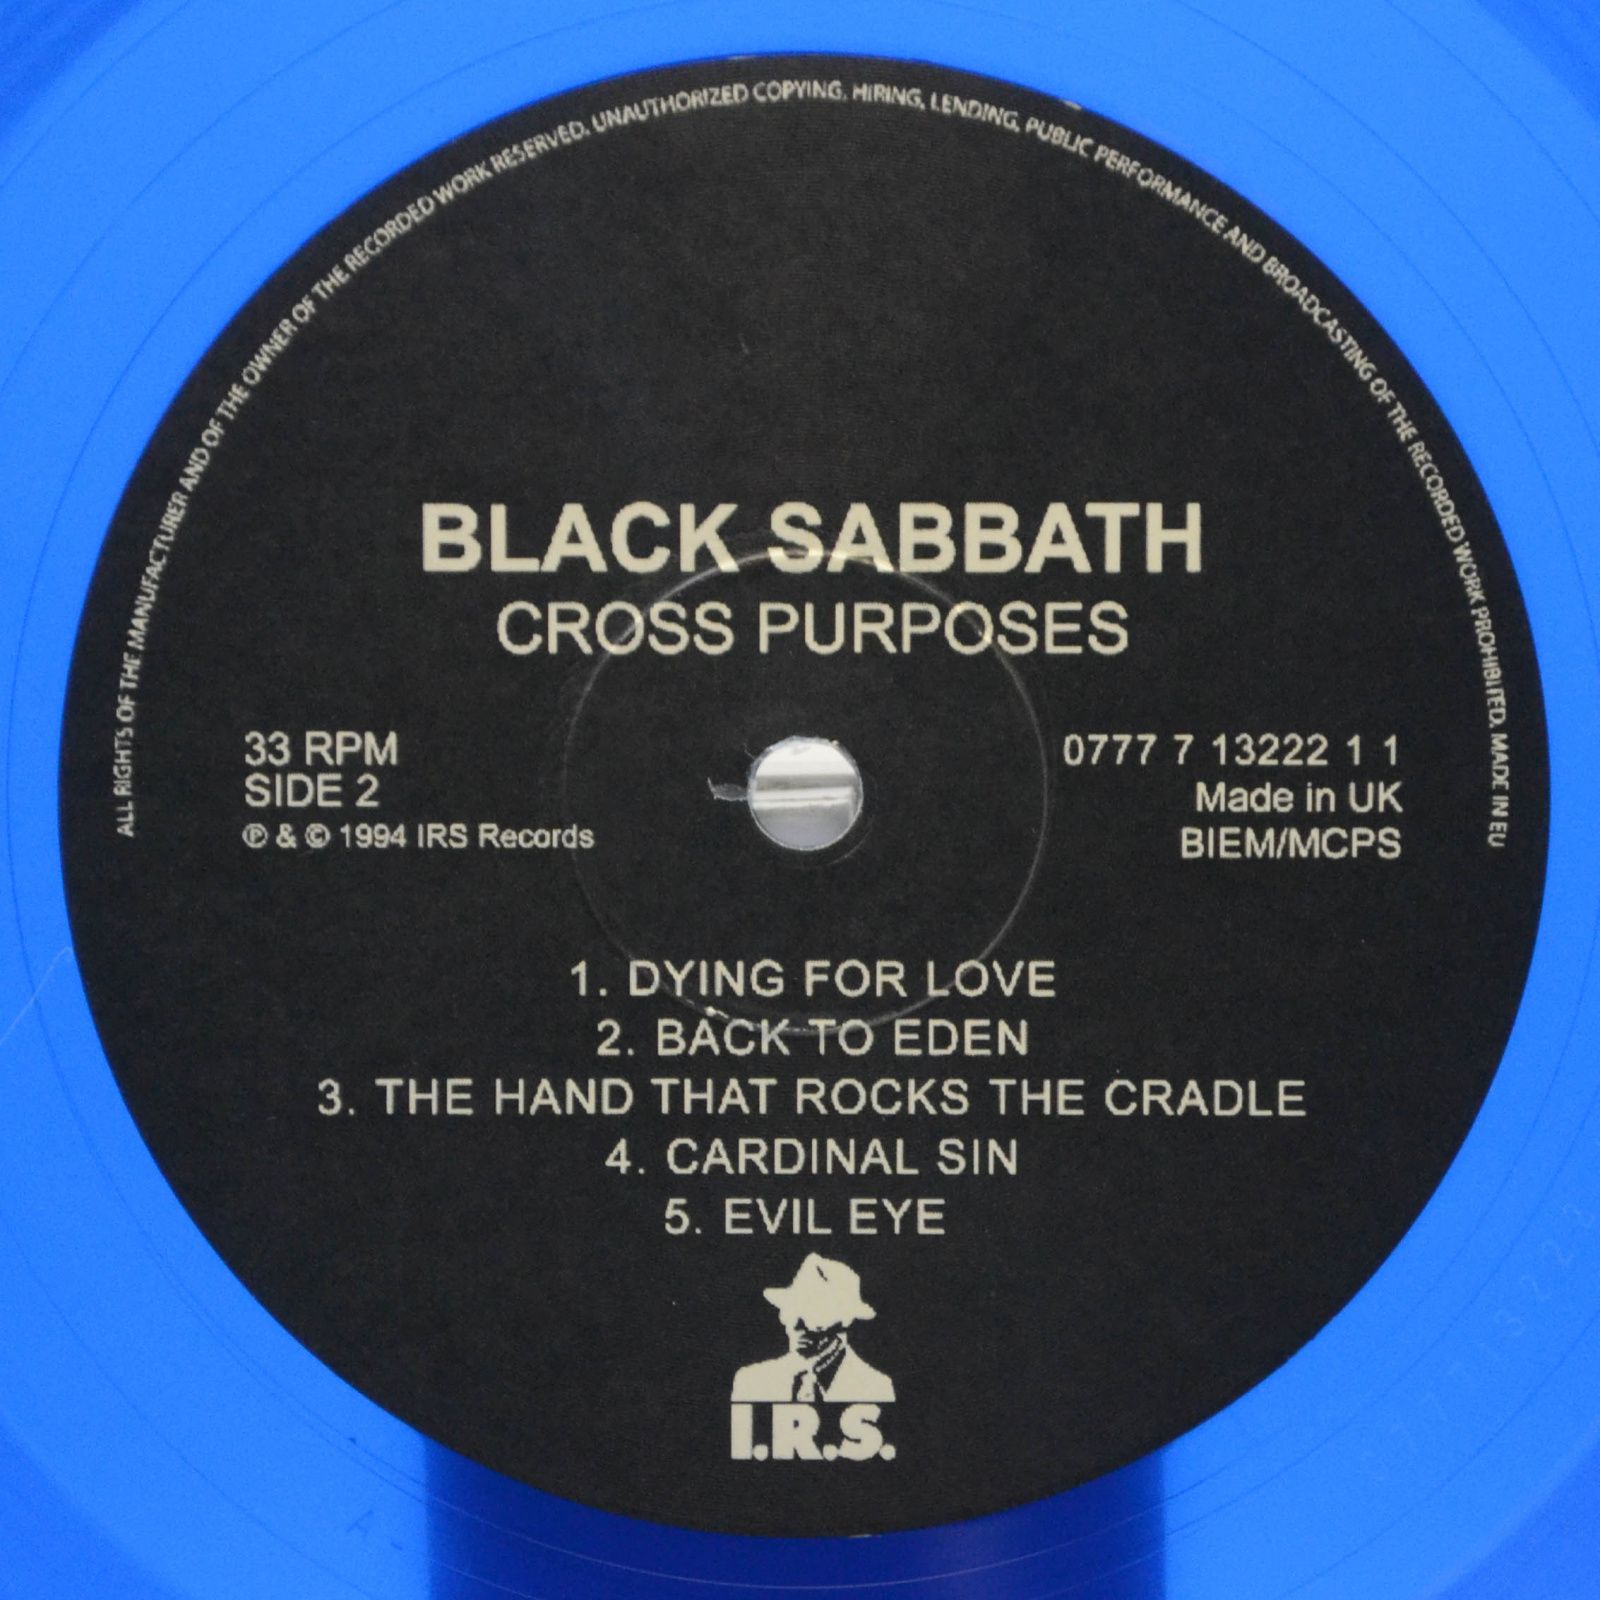 Black Sabbath — Cross Purposes, 1994